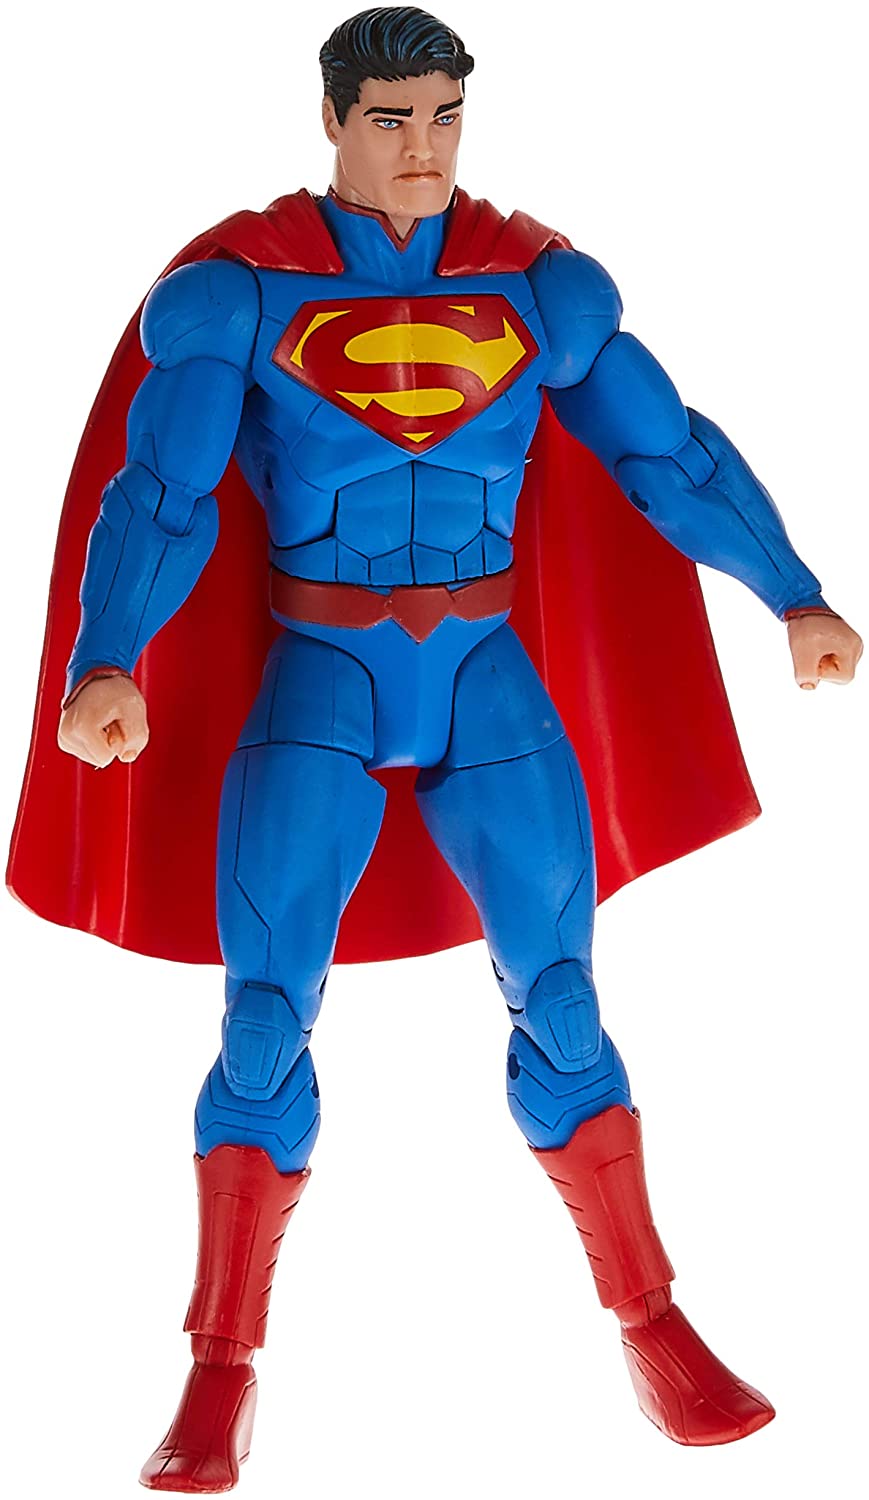 Dc Comics Jun160392 Designer Series Capullo Superman Action Figure